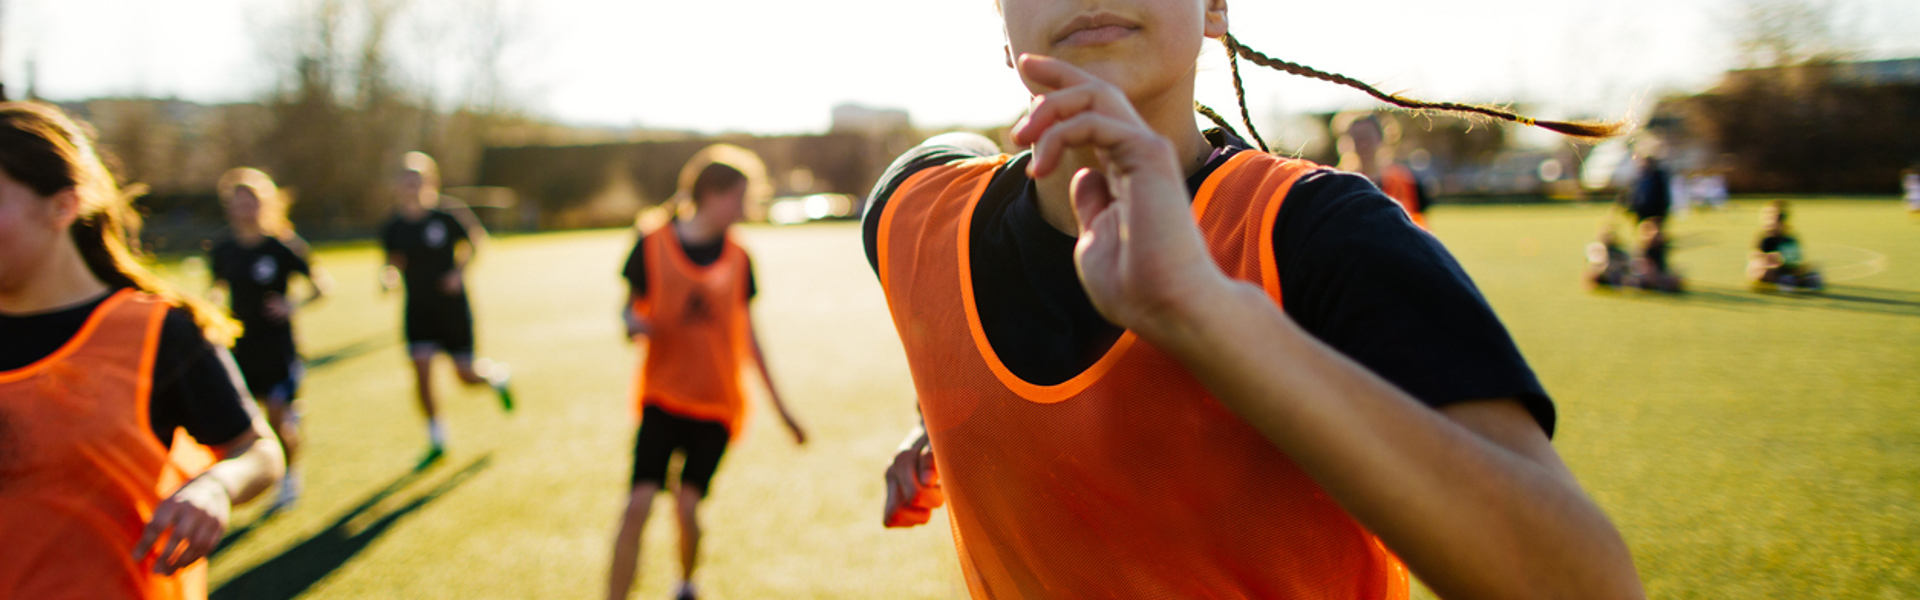 a woman in an orange sports bib running on a football field